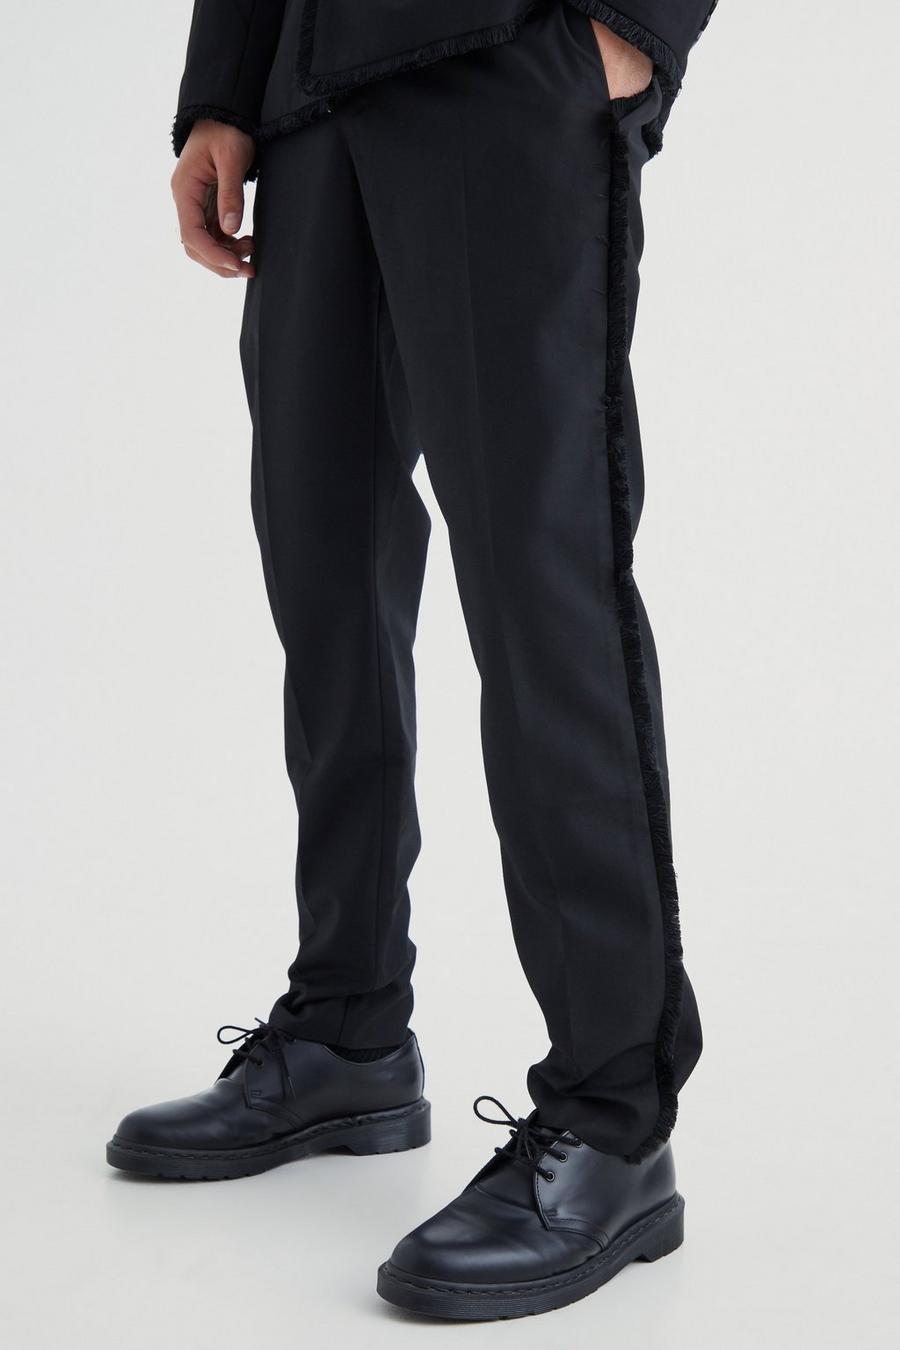 Black Kostymbyxor i slim fit med slitna detaljer